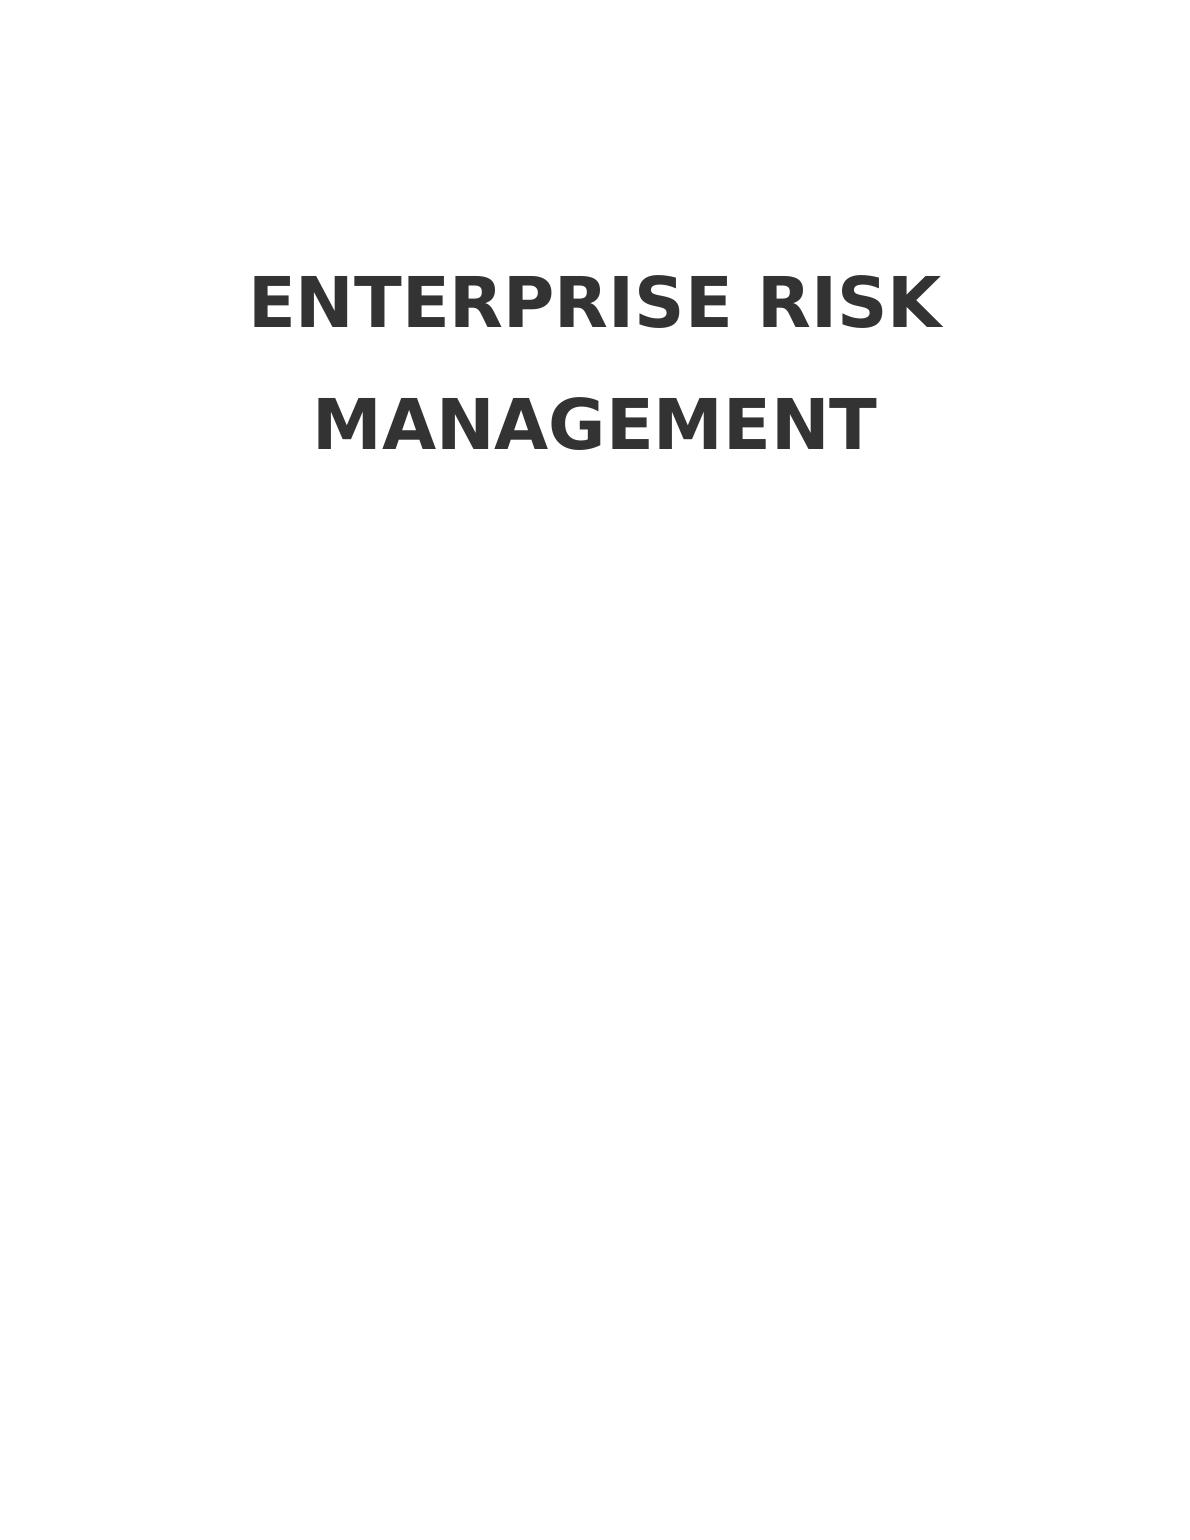 Enterprise Risk Management PDF_1